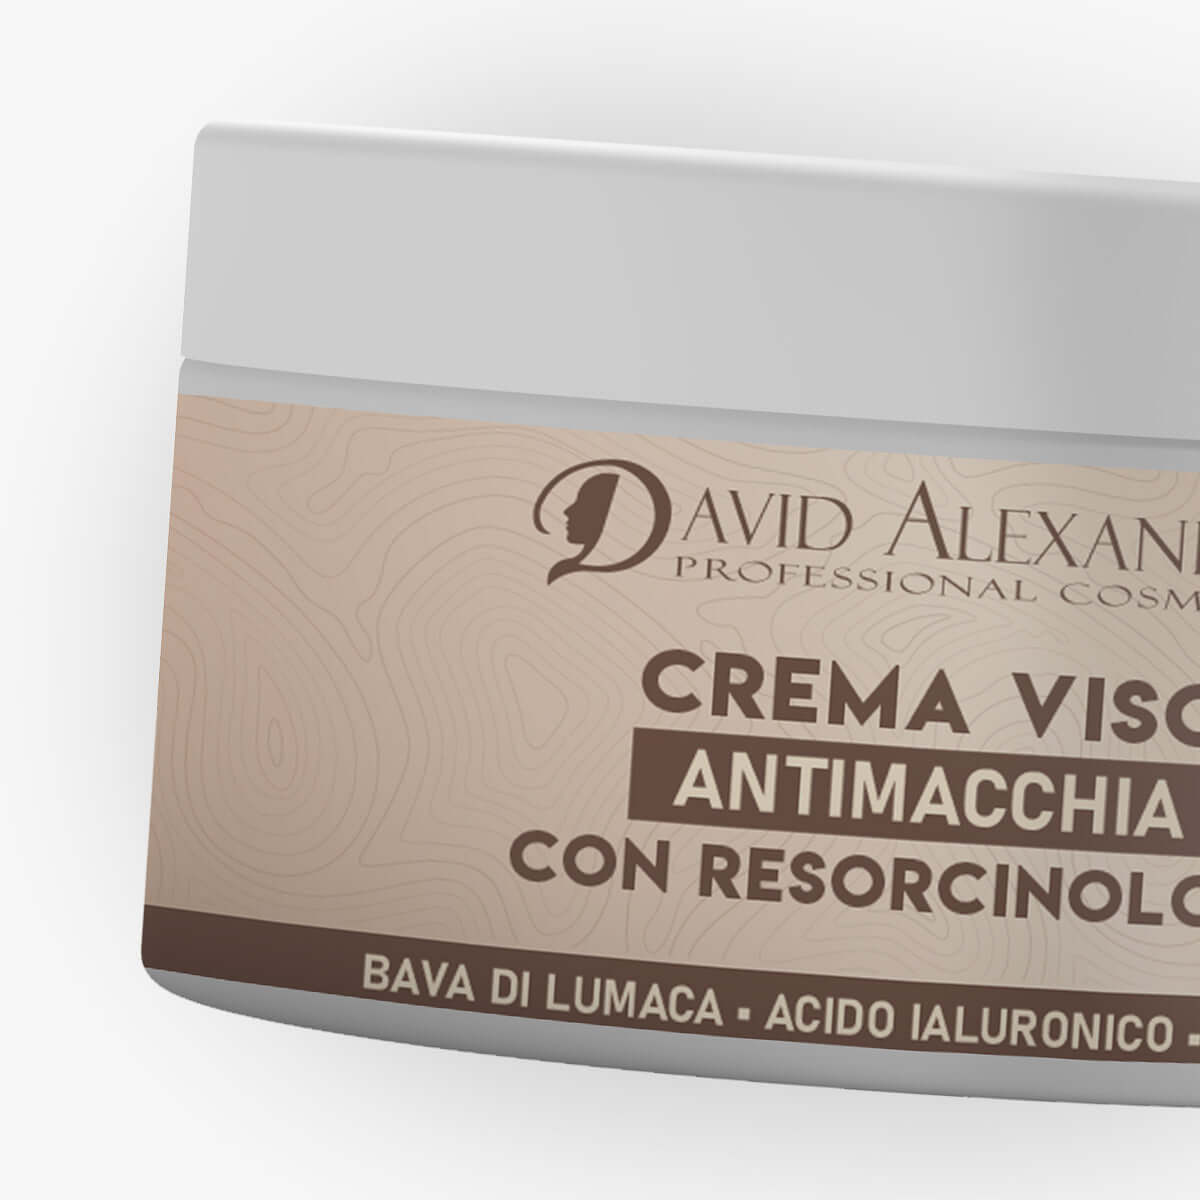 CREMA VISO ANTIMACCHIA - david alexander professional cosmetics